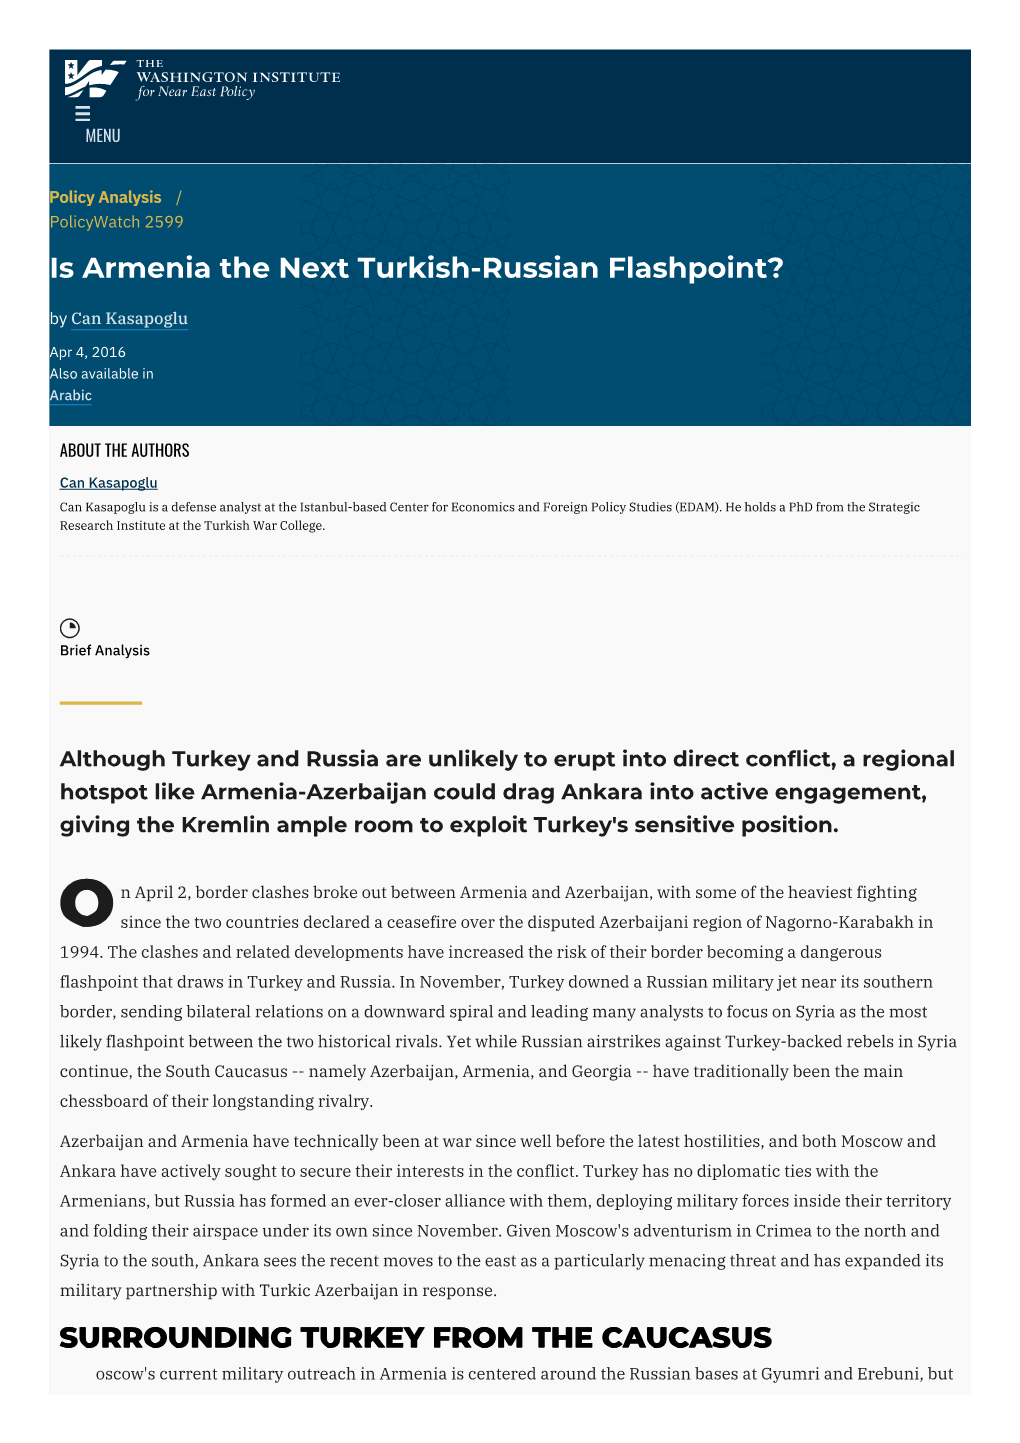 Is Armenia the Next Turkish-Russian Flashpoint? | the Washington Institute